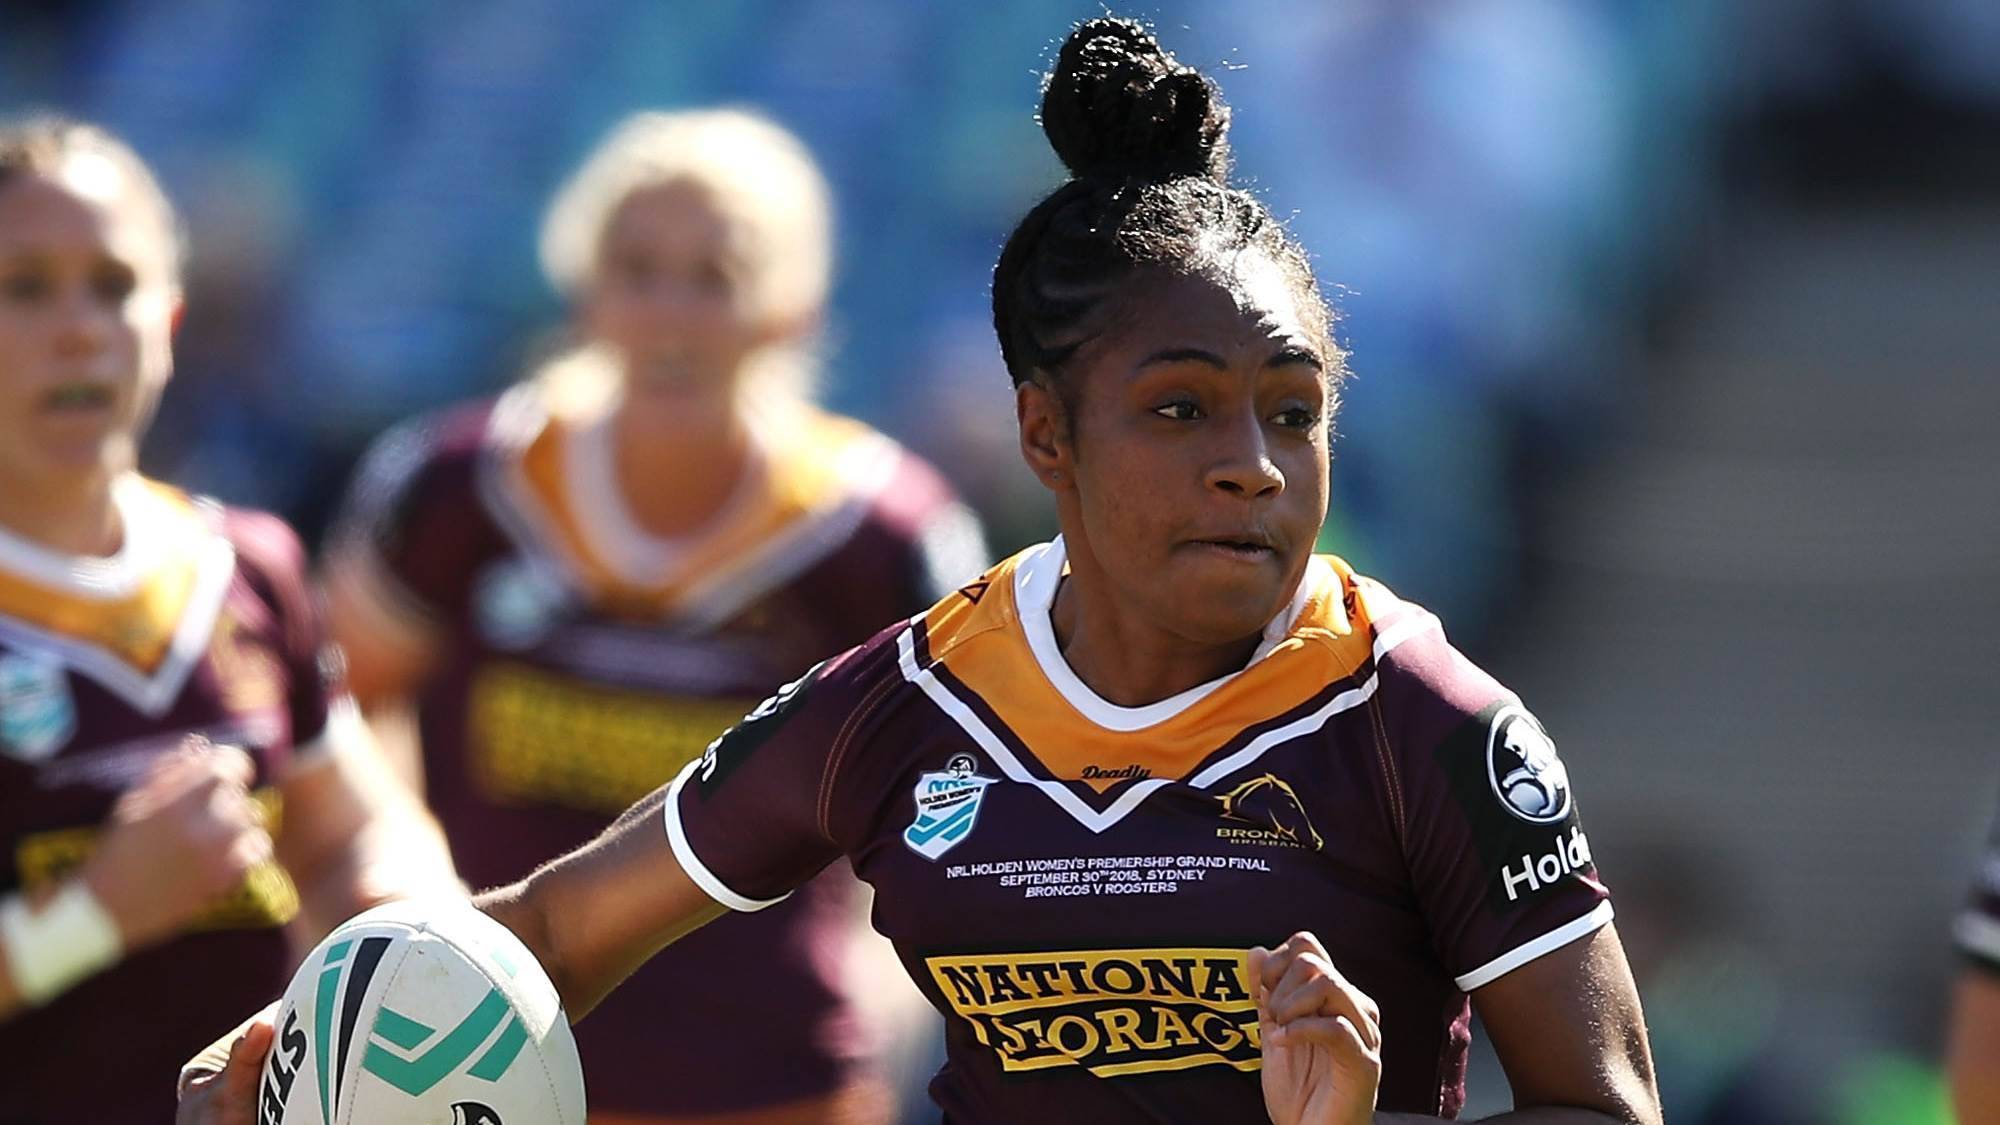 Kuk: Sport can change mindsets on women - The Women's Game - Australia's  Home of Women's Sport News - League